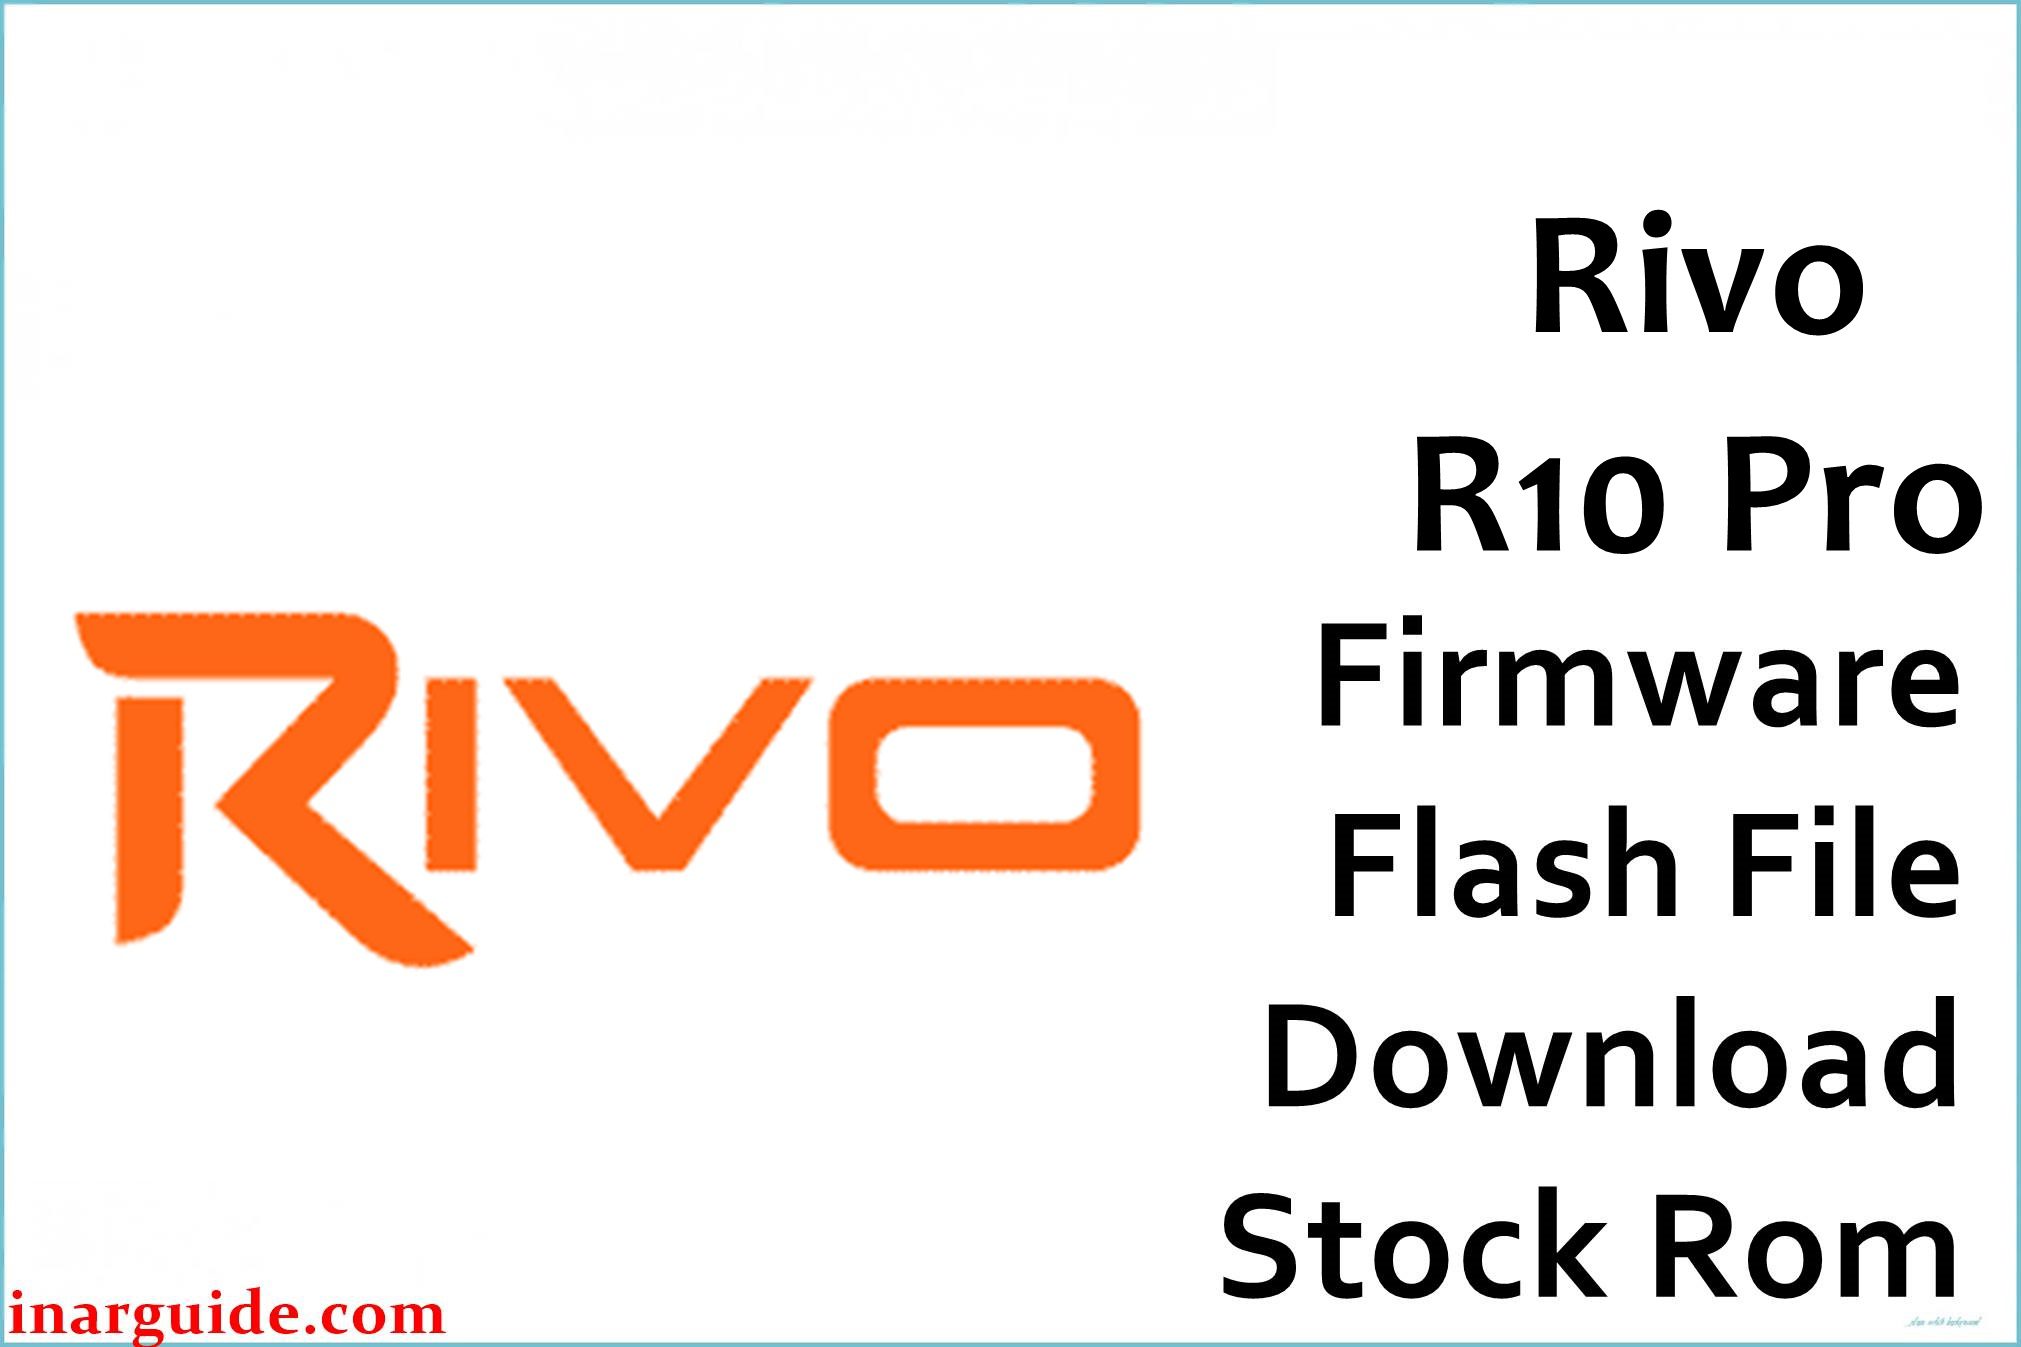 Rivo R10 Pro